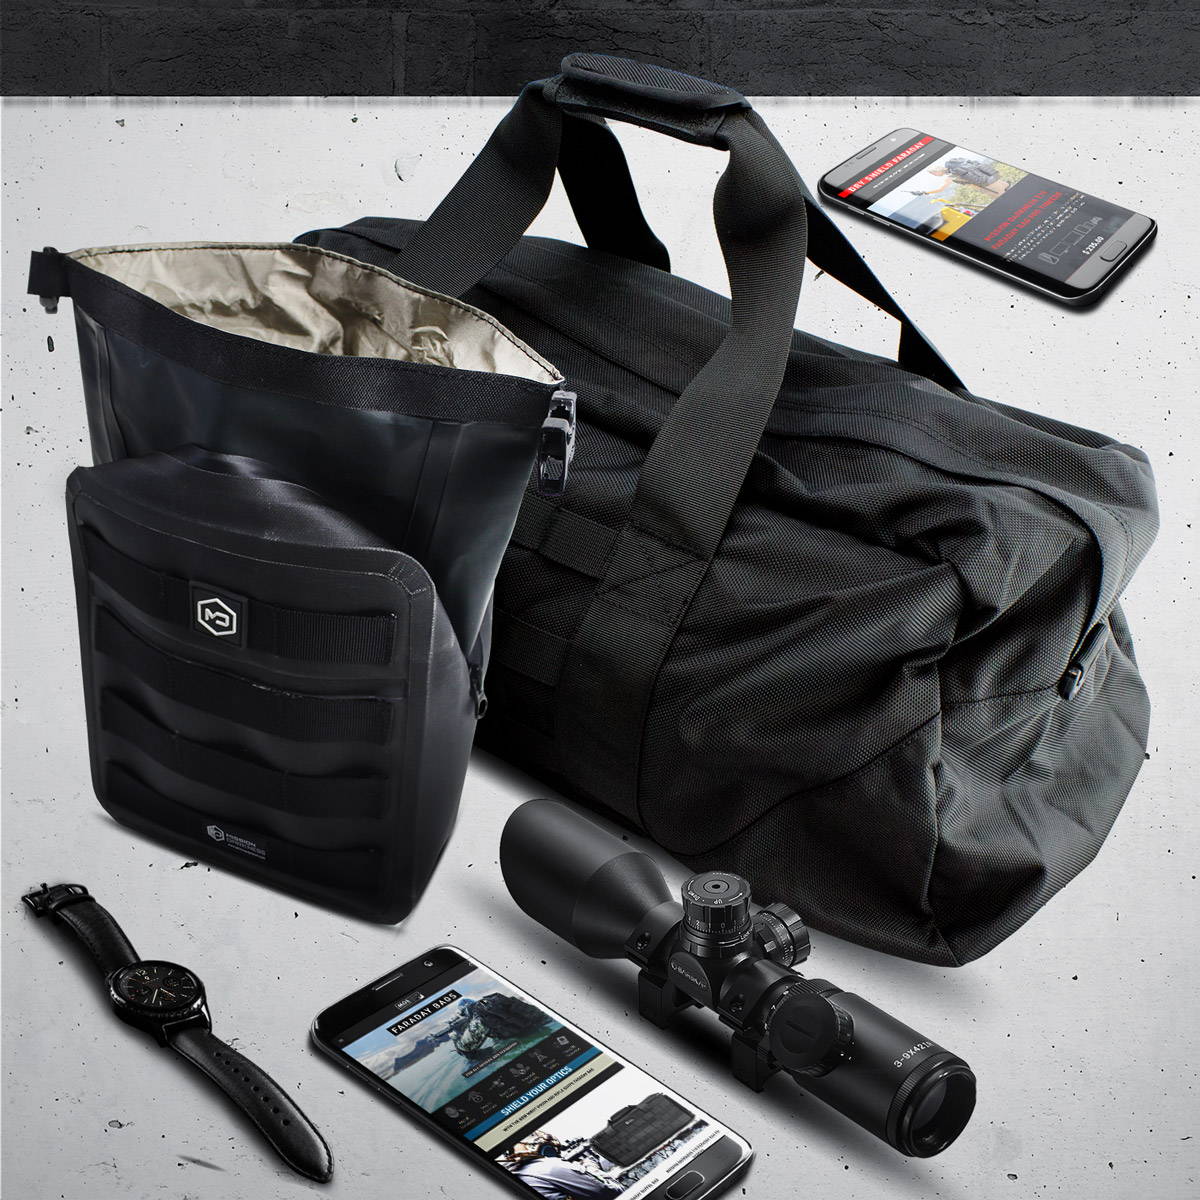  WEIGUZC Waterproof MOLLE Dry Bag - Tactical Backpack